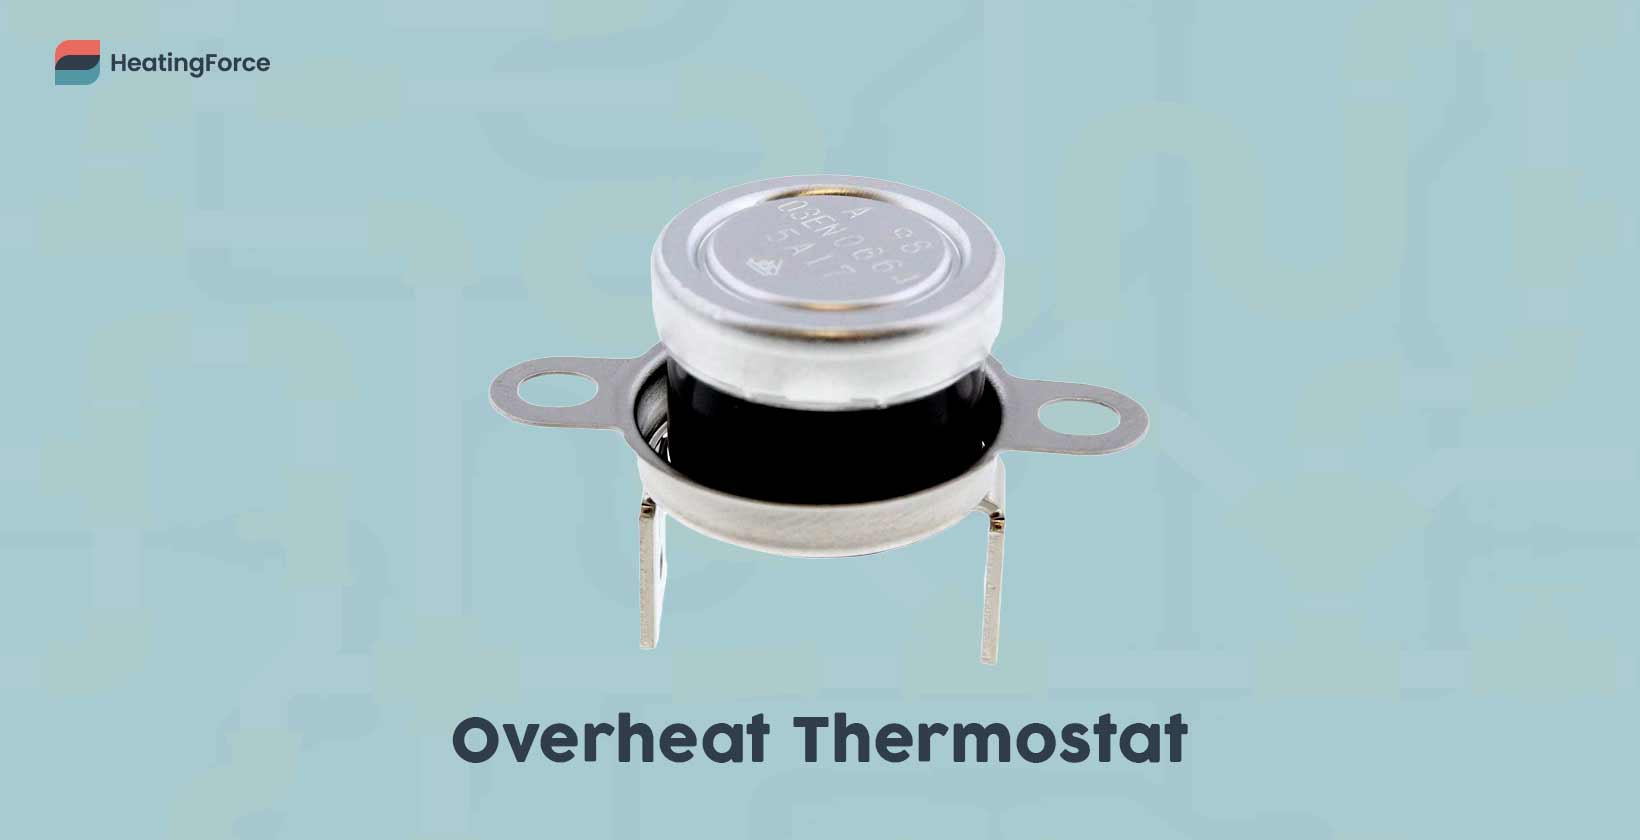 Overheat thermostat